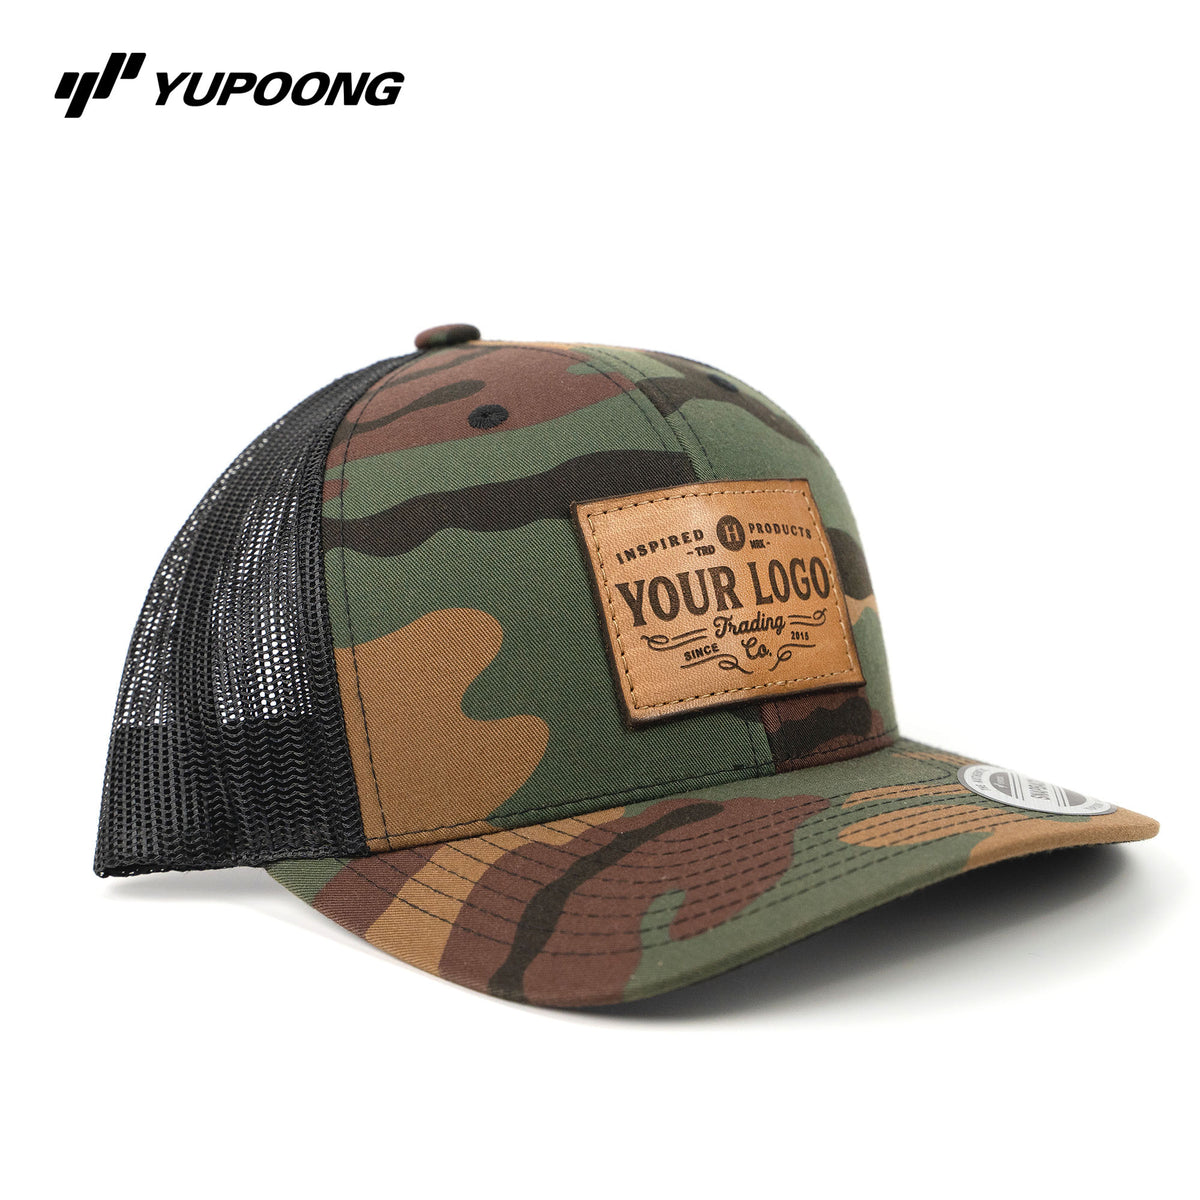 Yupoong 6606 Green Camo/Black Custom Mesh Snapback Trucker Hat with YOUR LOGO